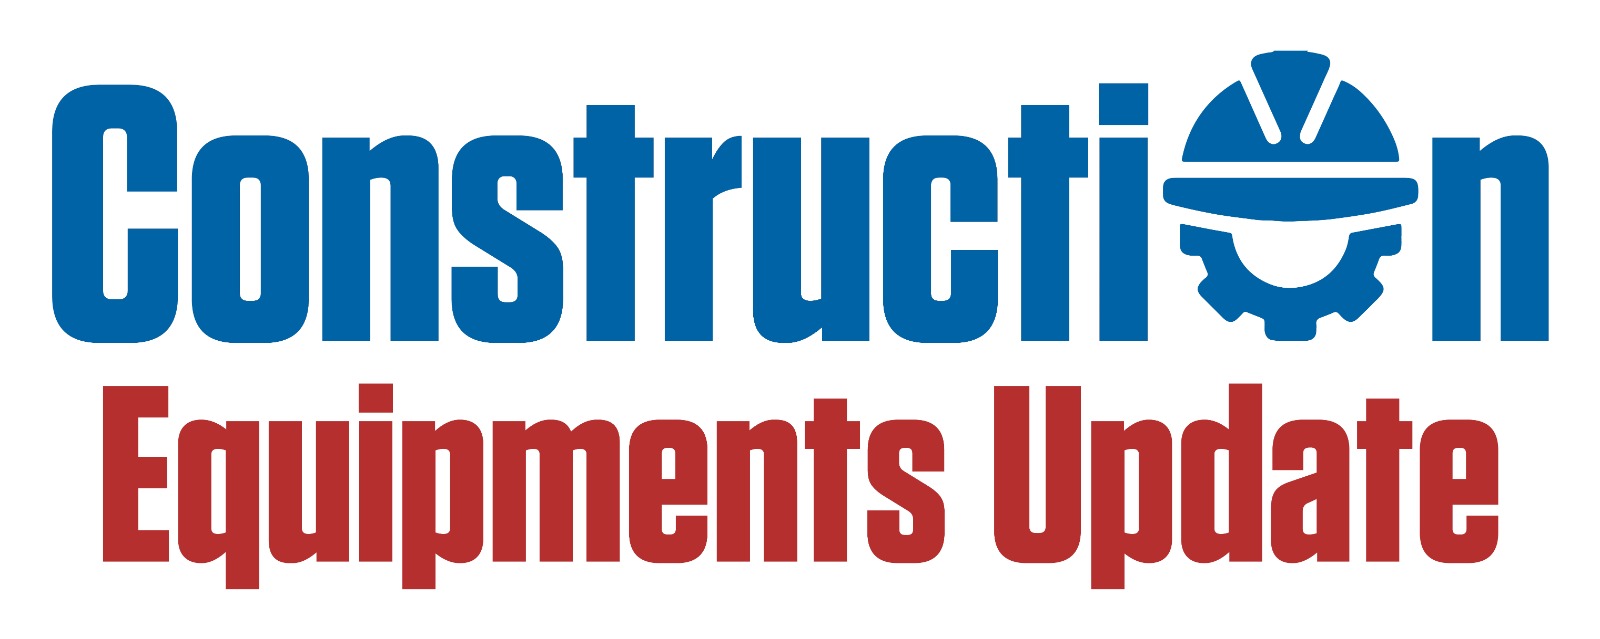 Construction Equipment News Magazine in India